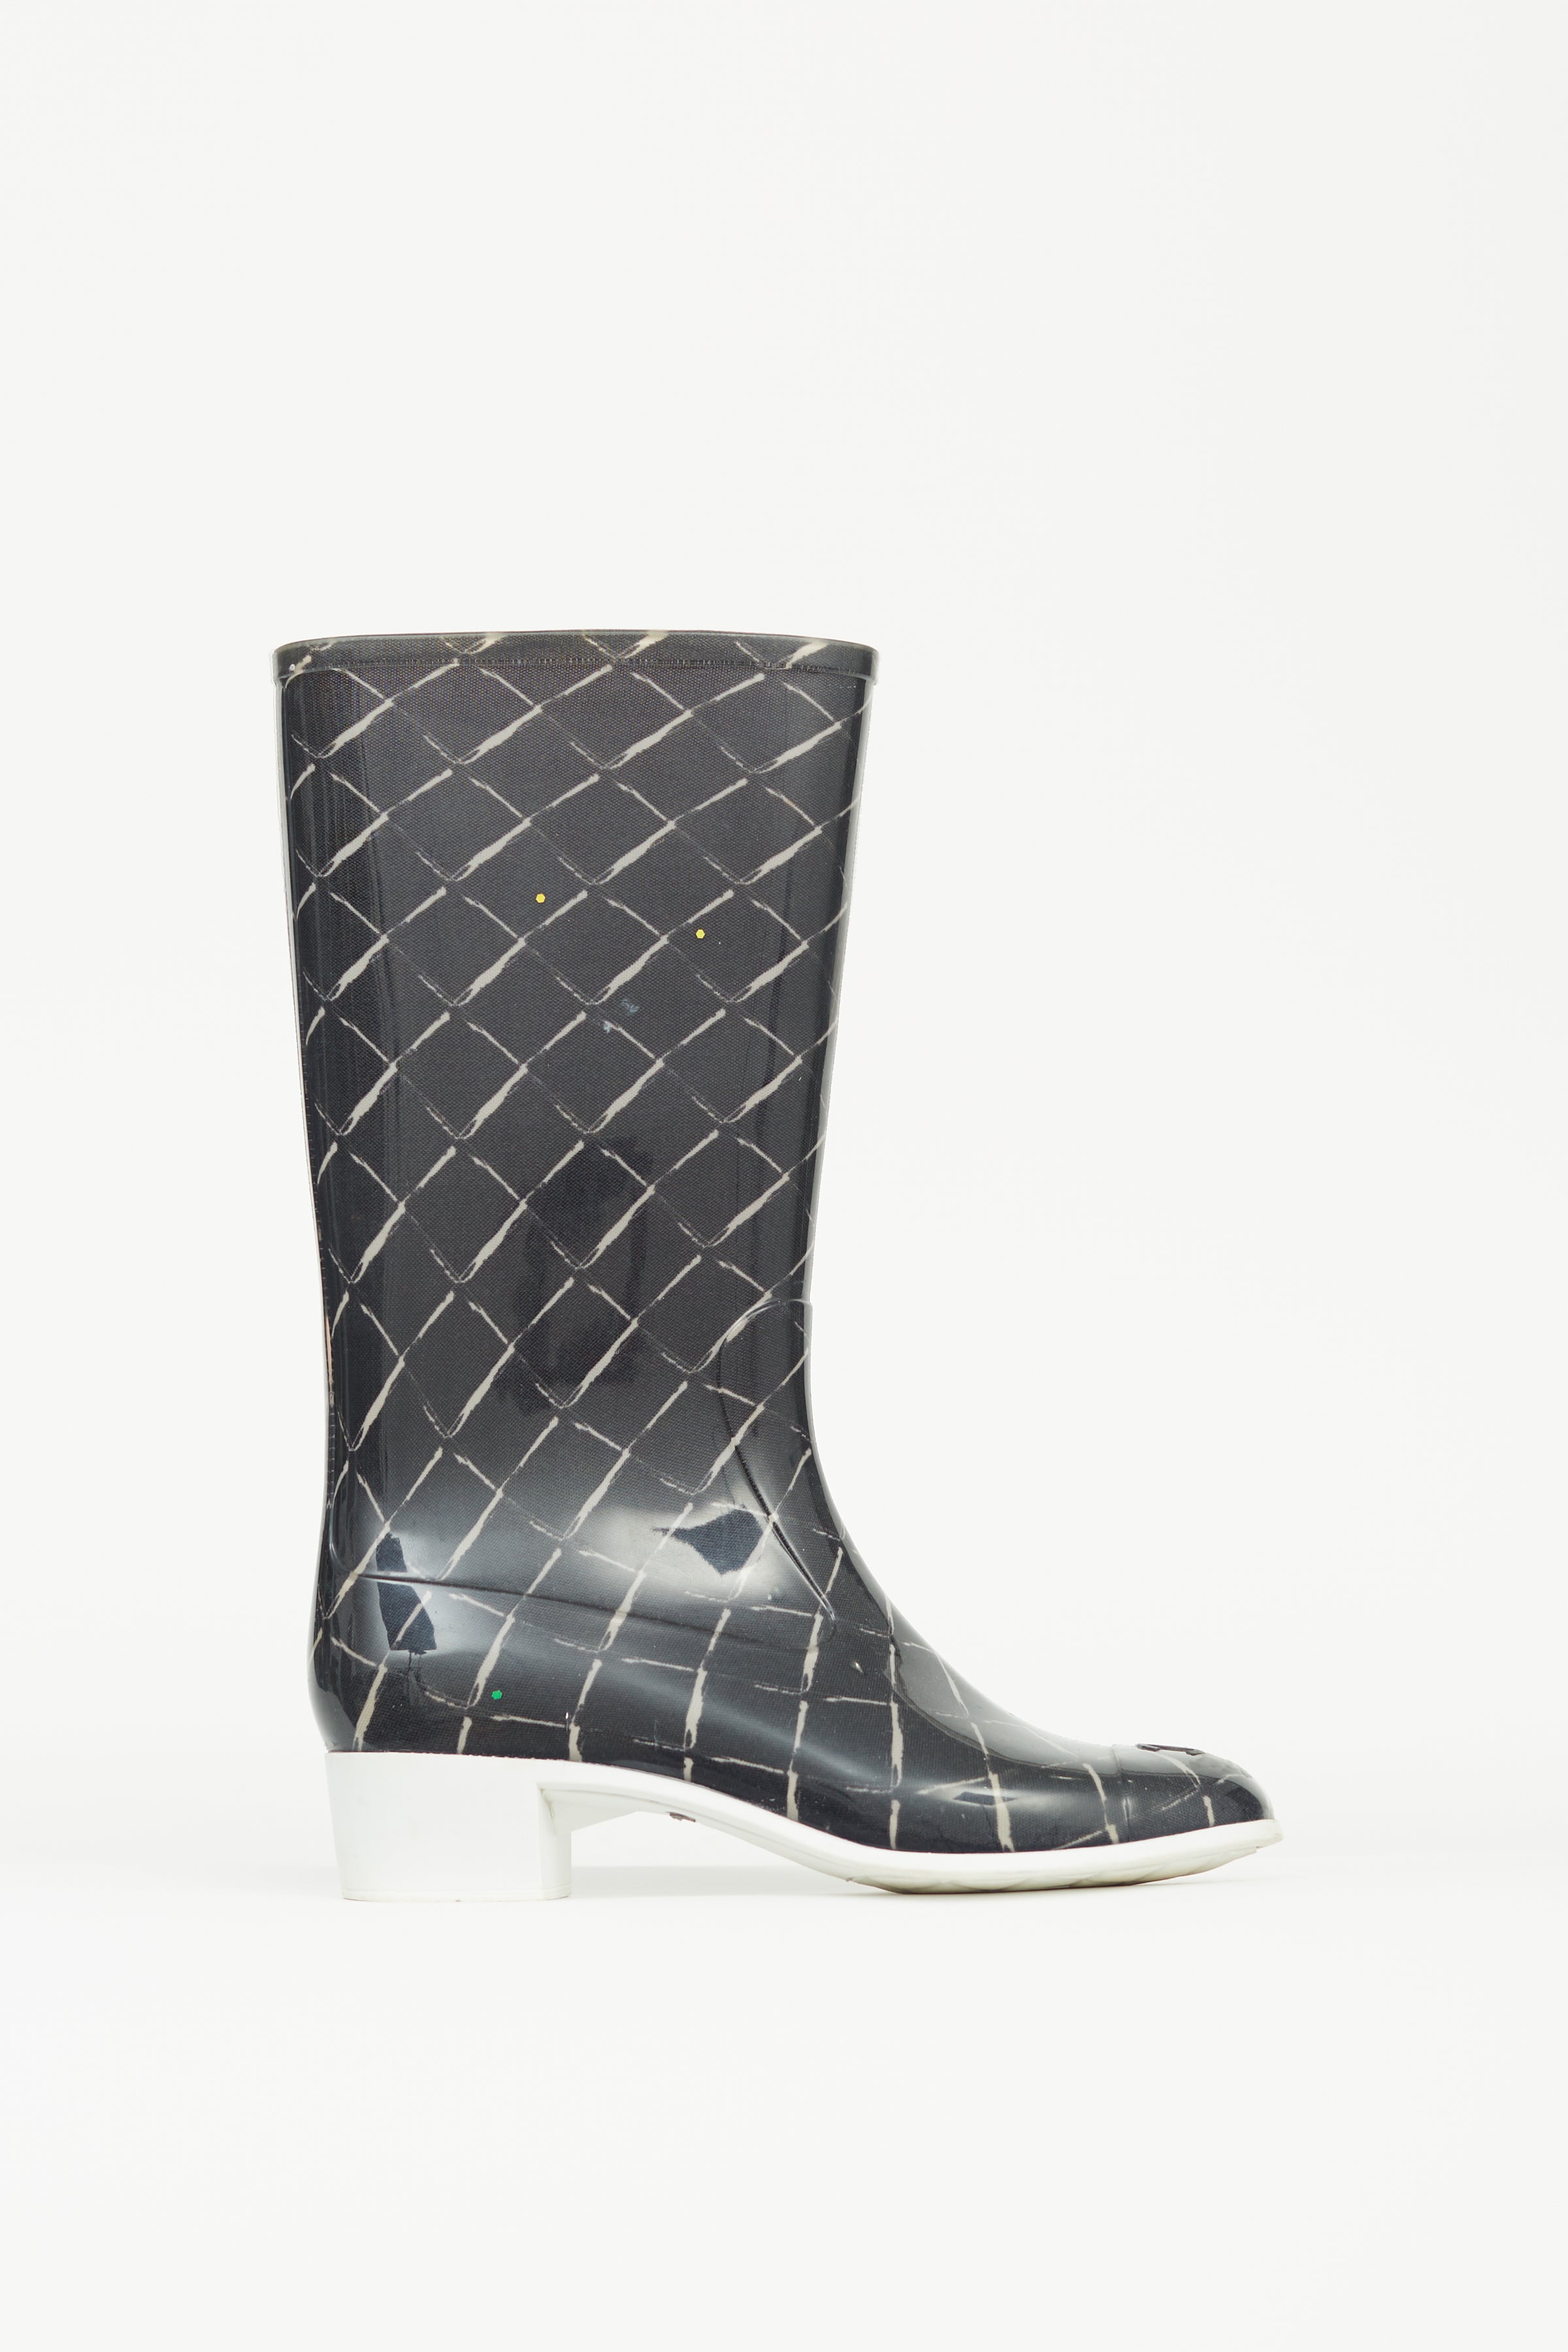 Chanel Womens Rain Boots Boots, White, 39